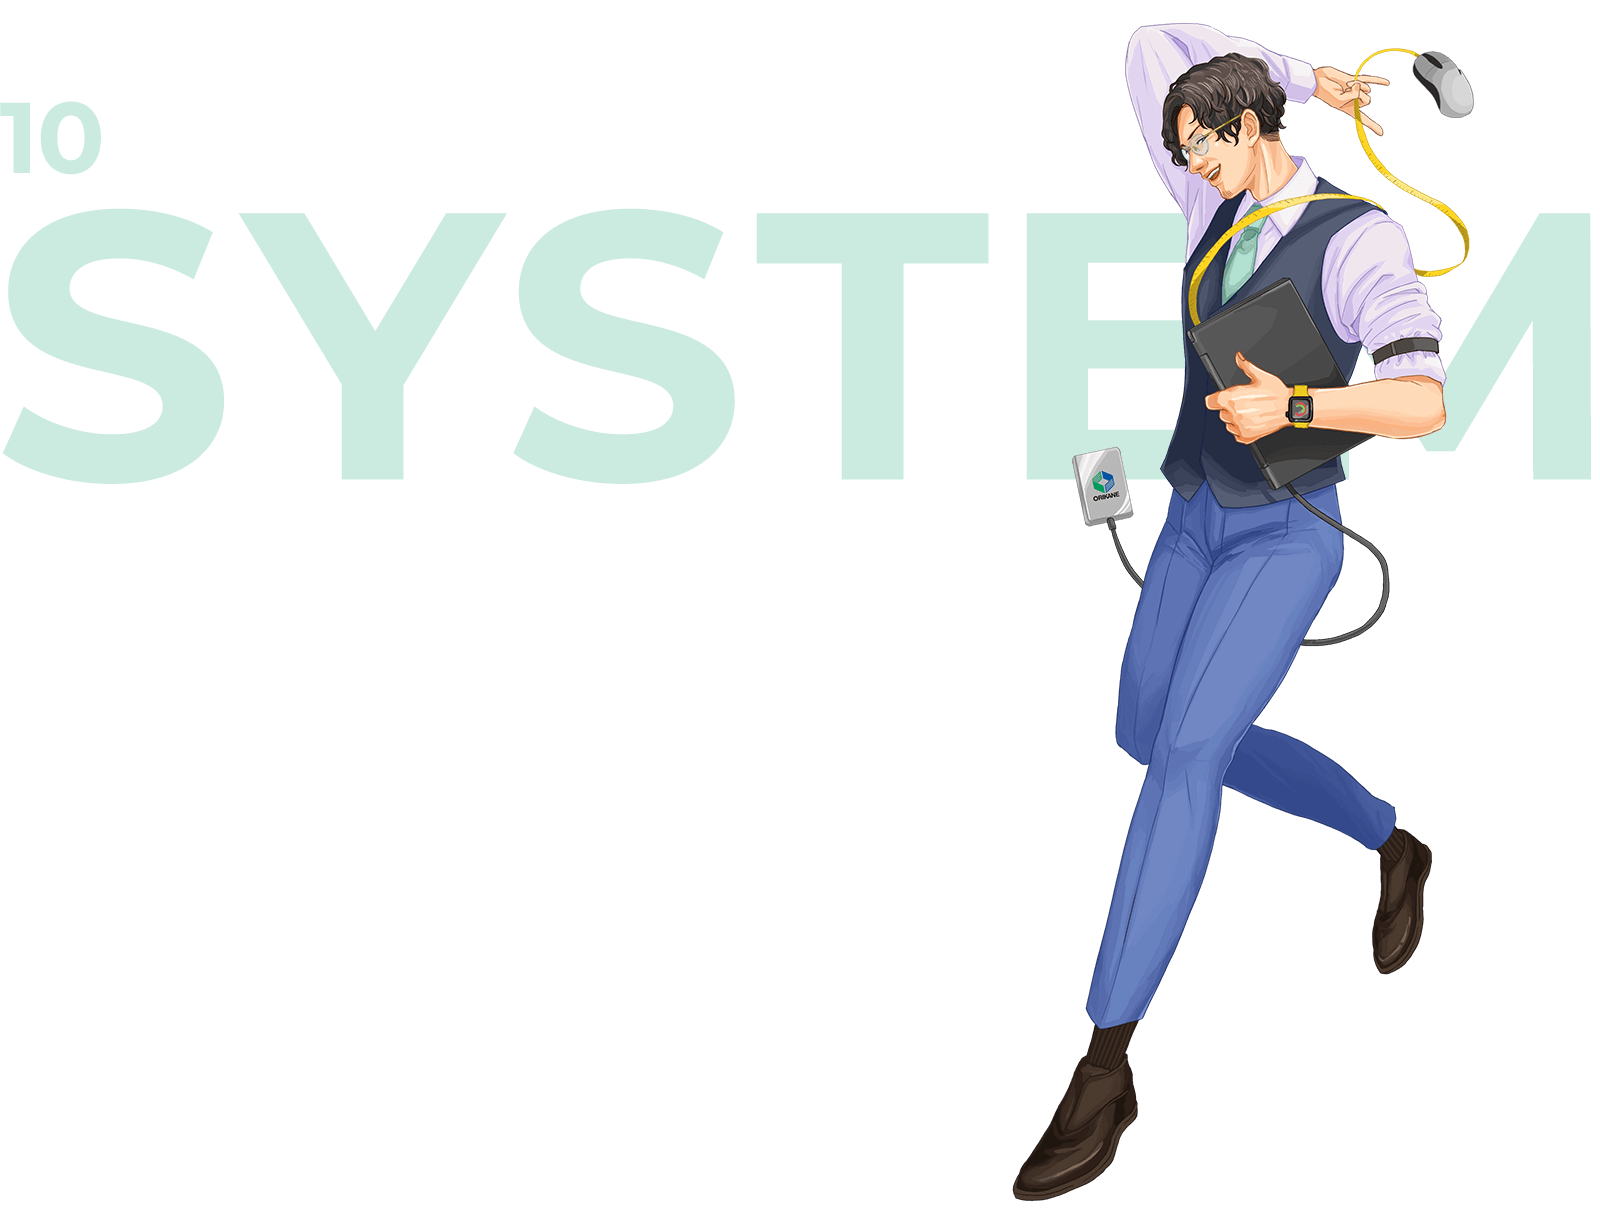 10 SYSTEM